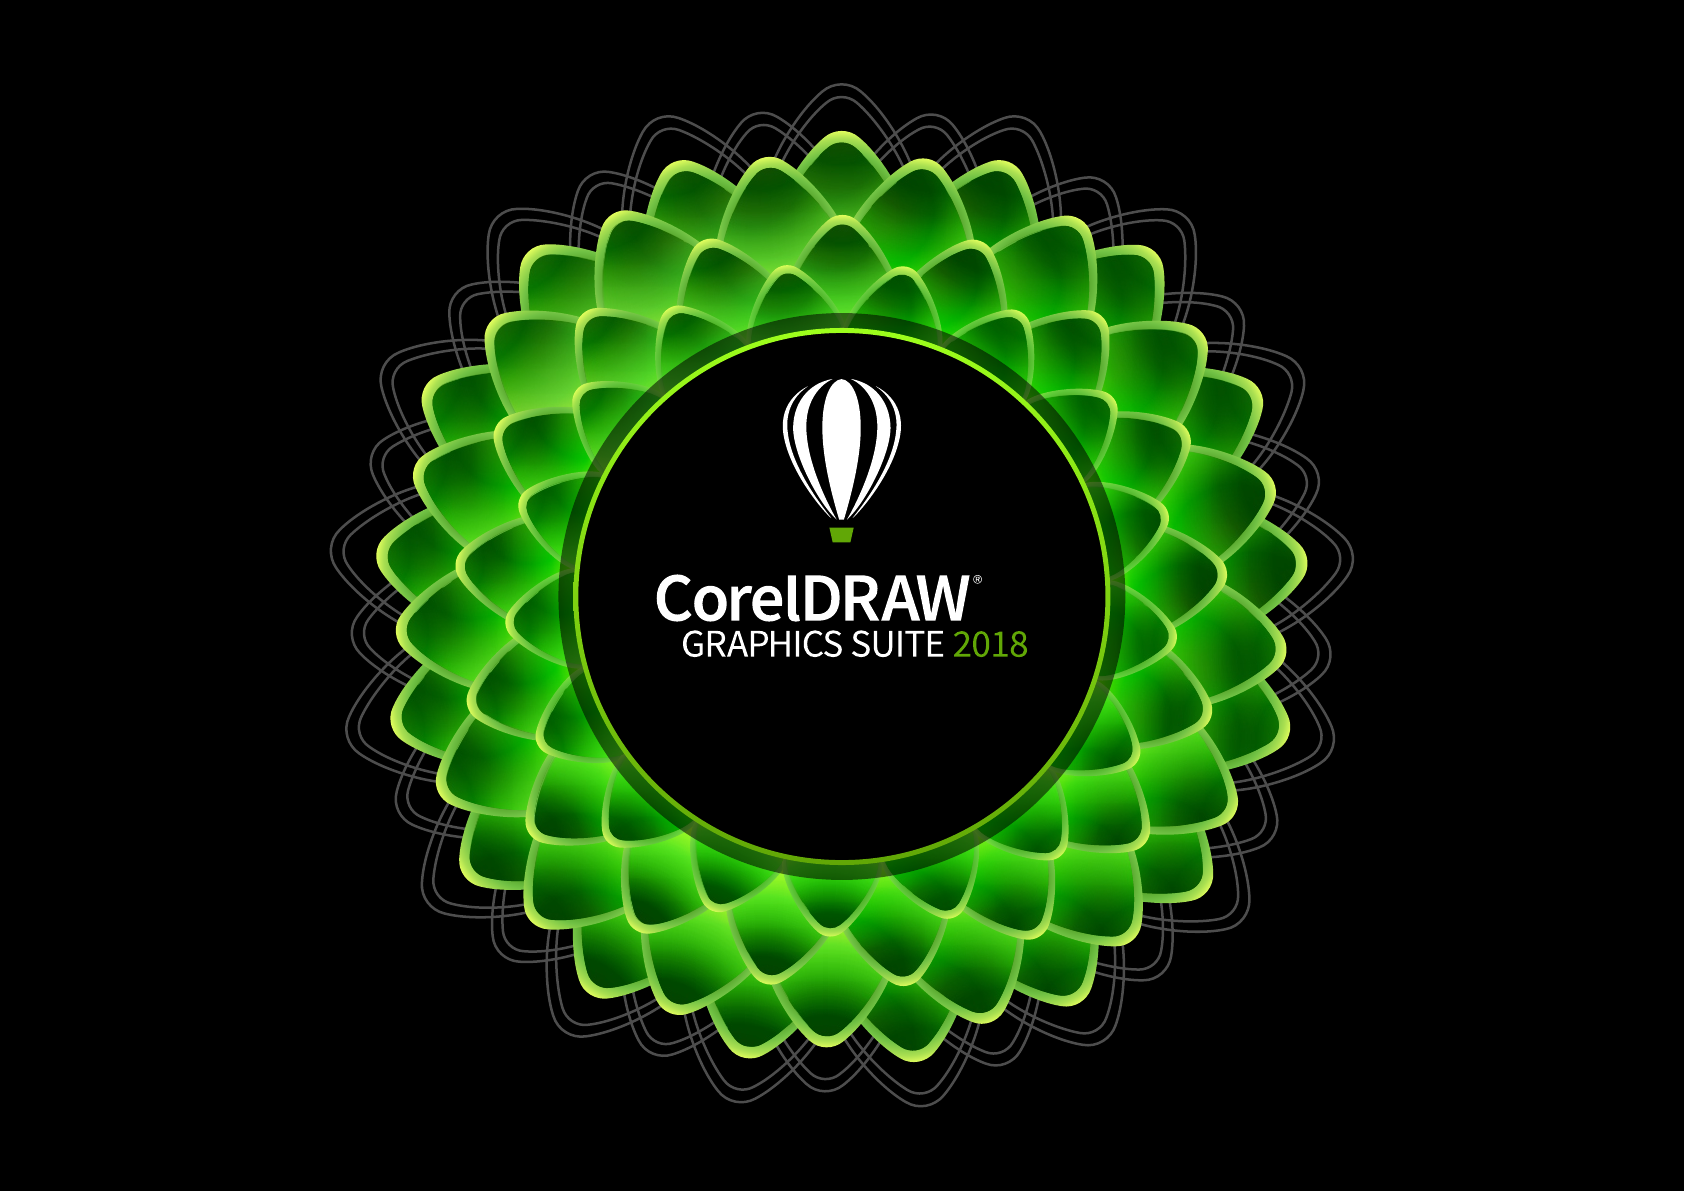 Coreldraw. Coreldraw Graphics Suite. Coreldraw 2018. Coreldraw Graphics Suite 2018. Corel 2018